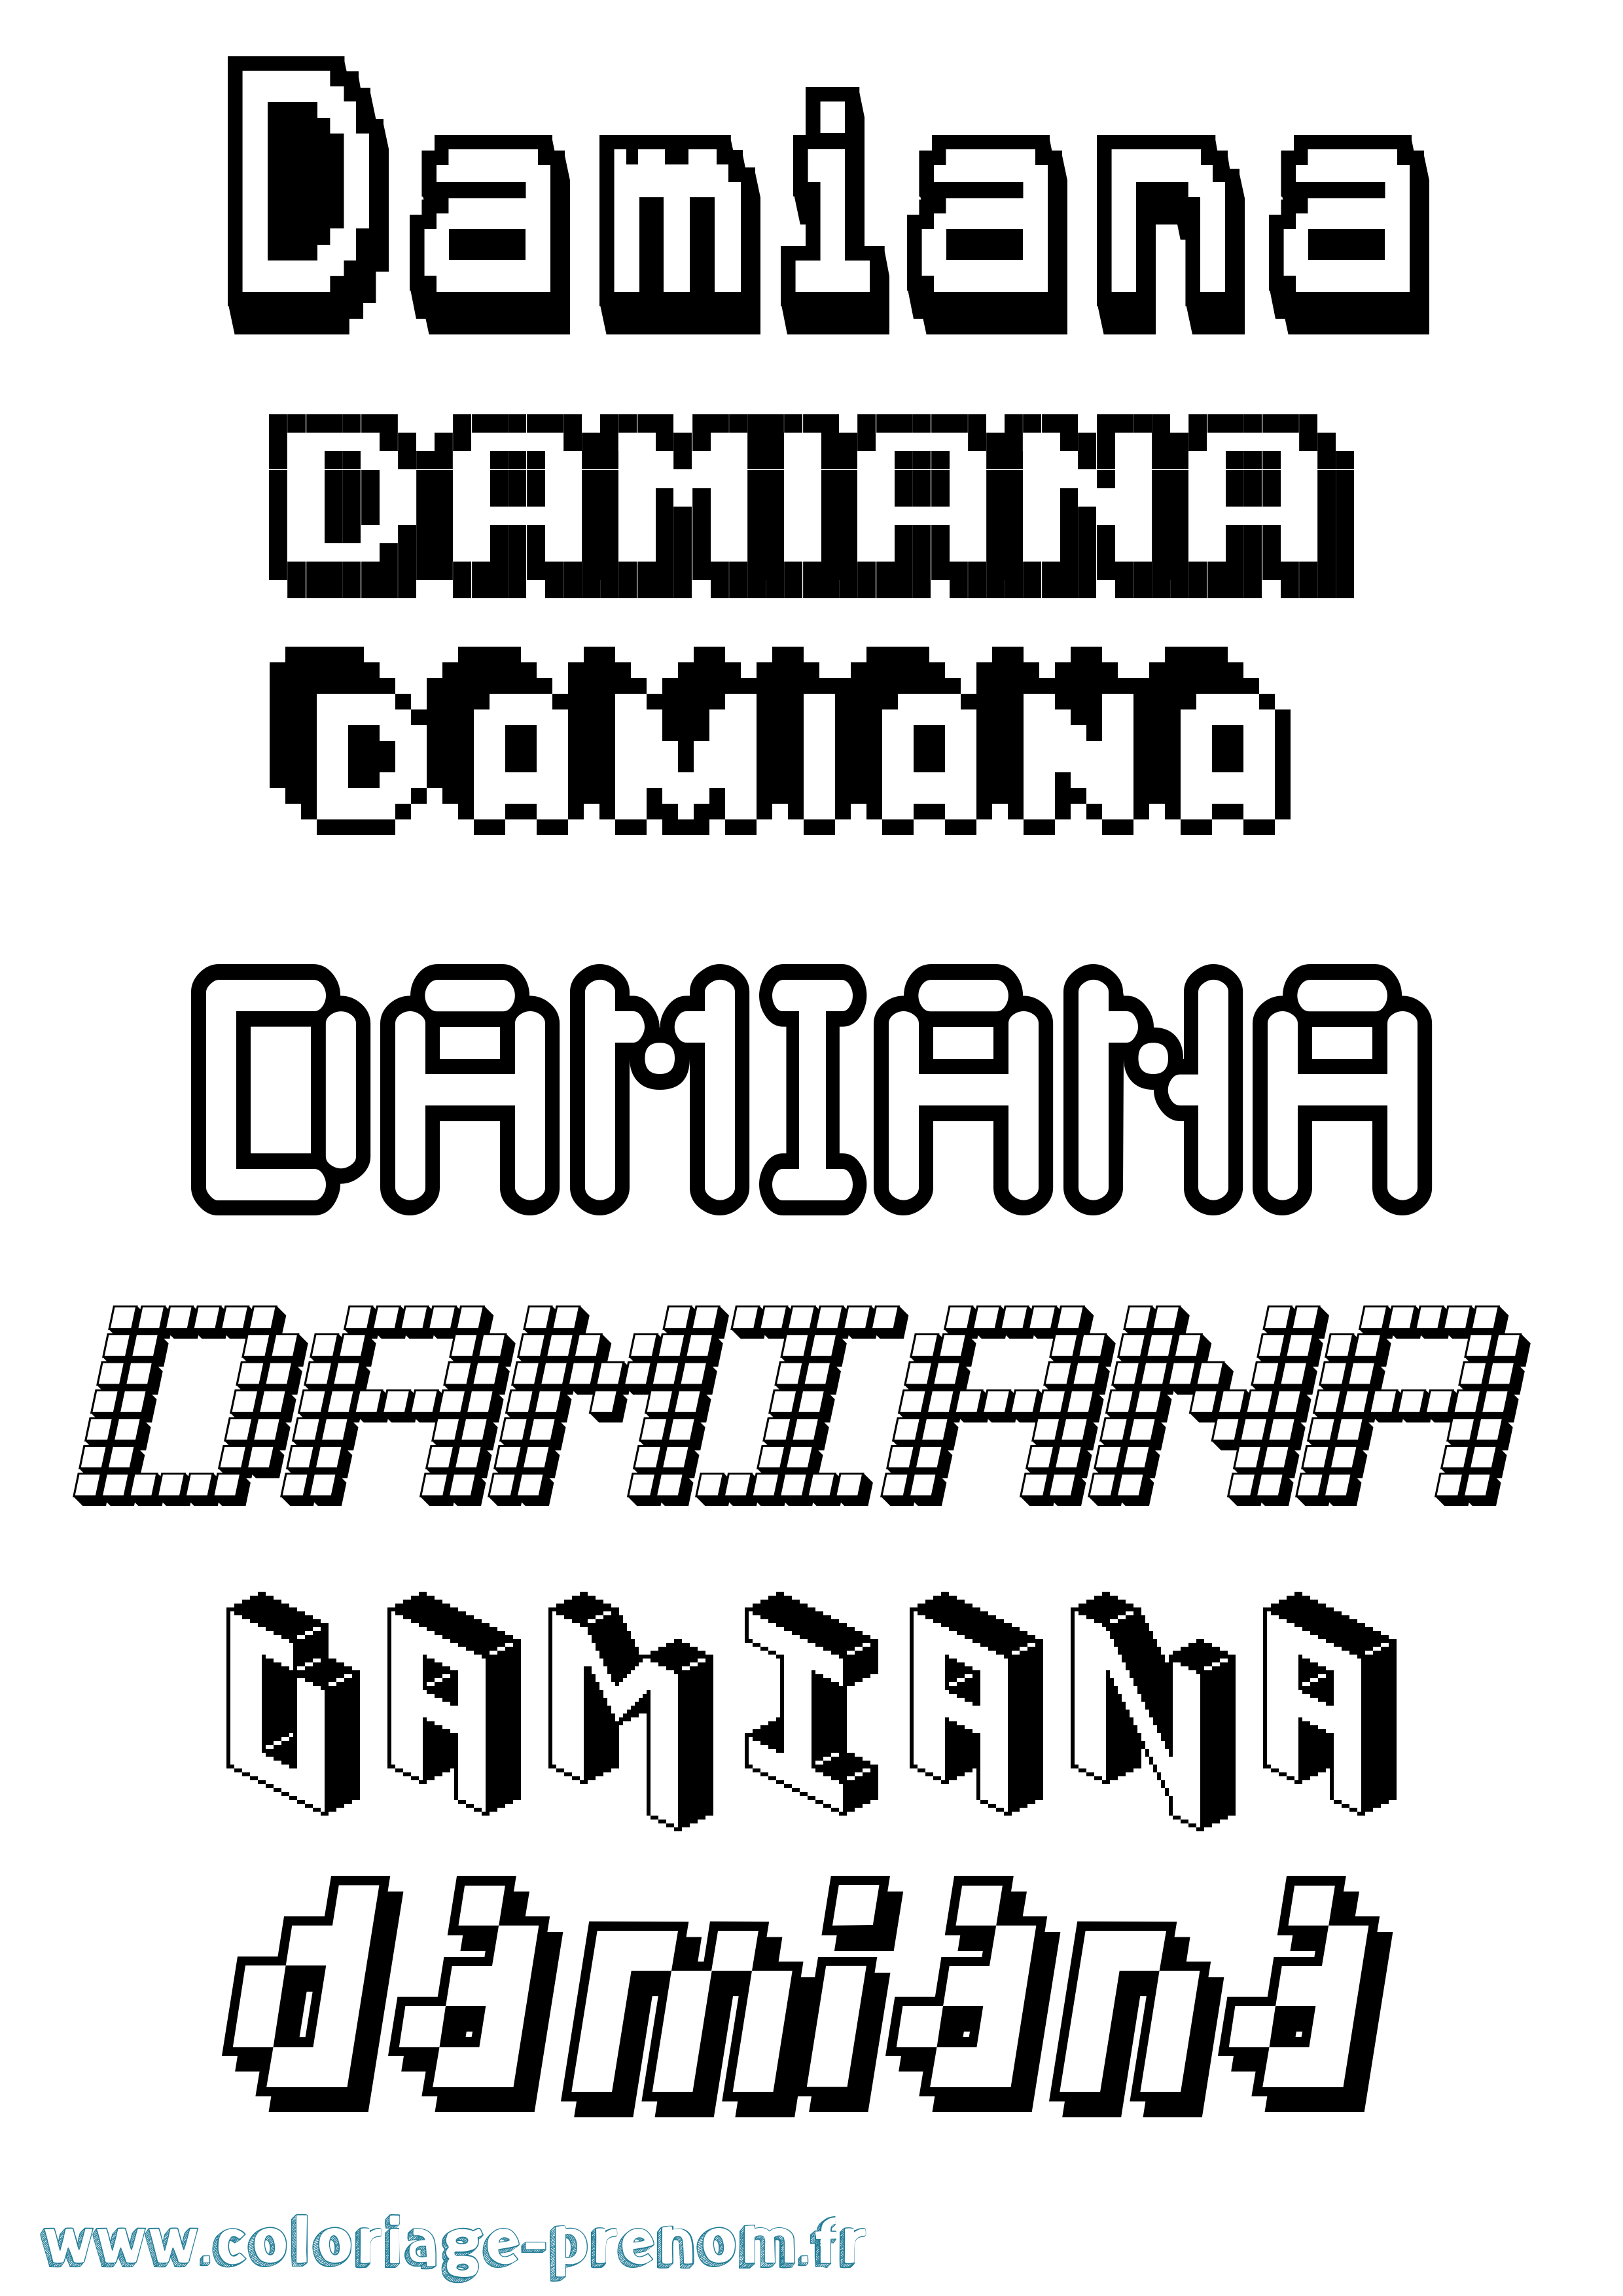 Coloriage prénom Damiana Pixel